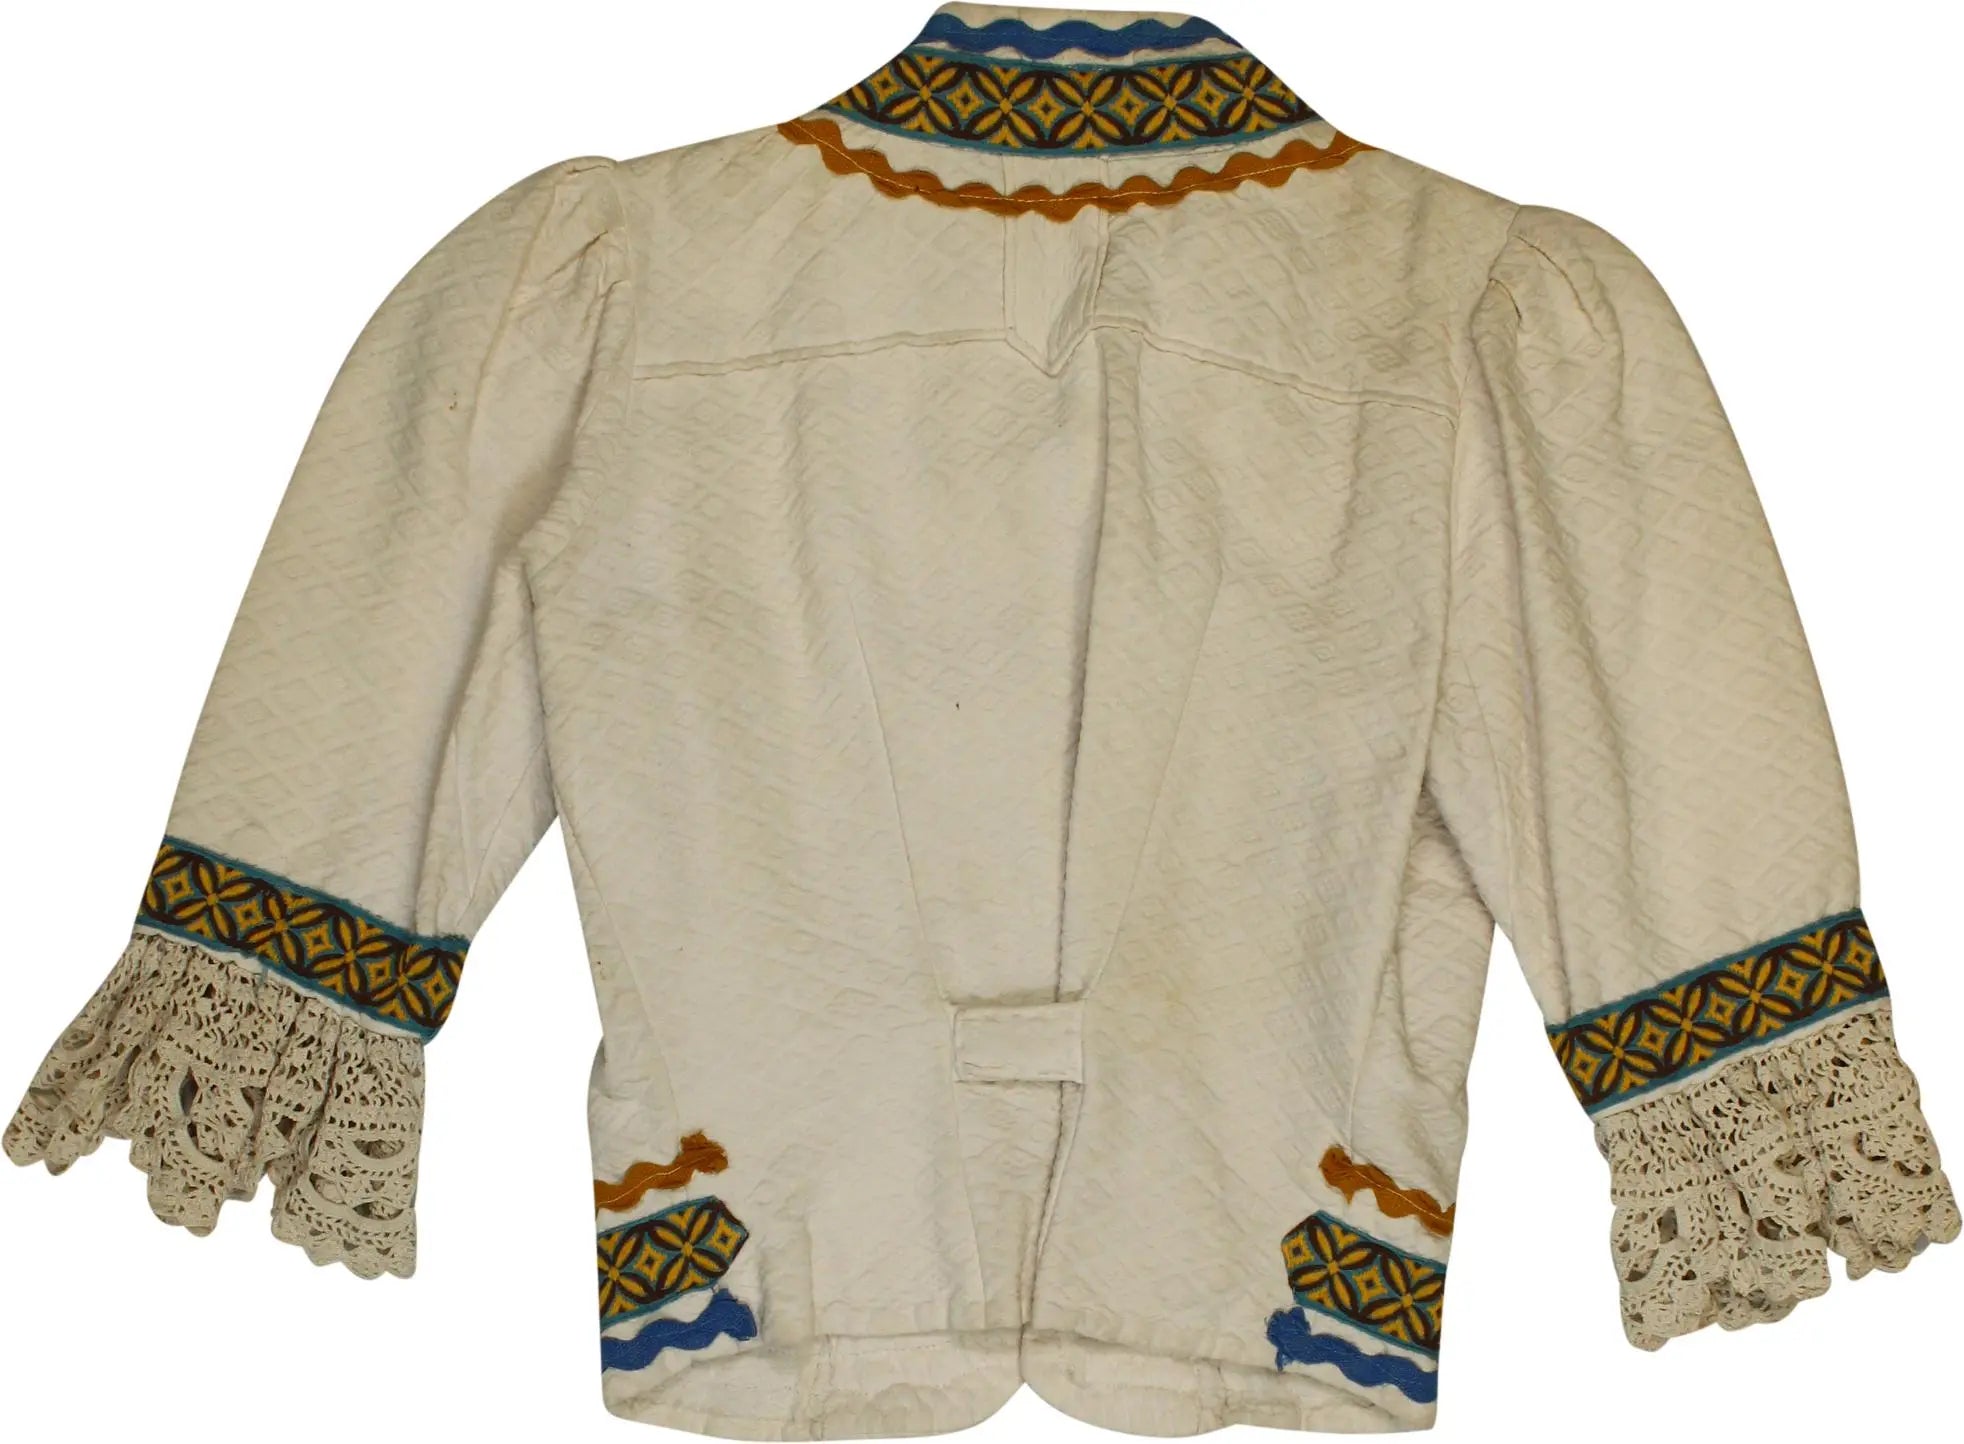 Handmade - Handmade Cardigan- ThriftTale.com - Vintage and second handclothing